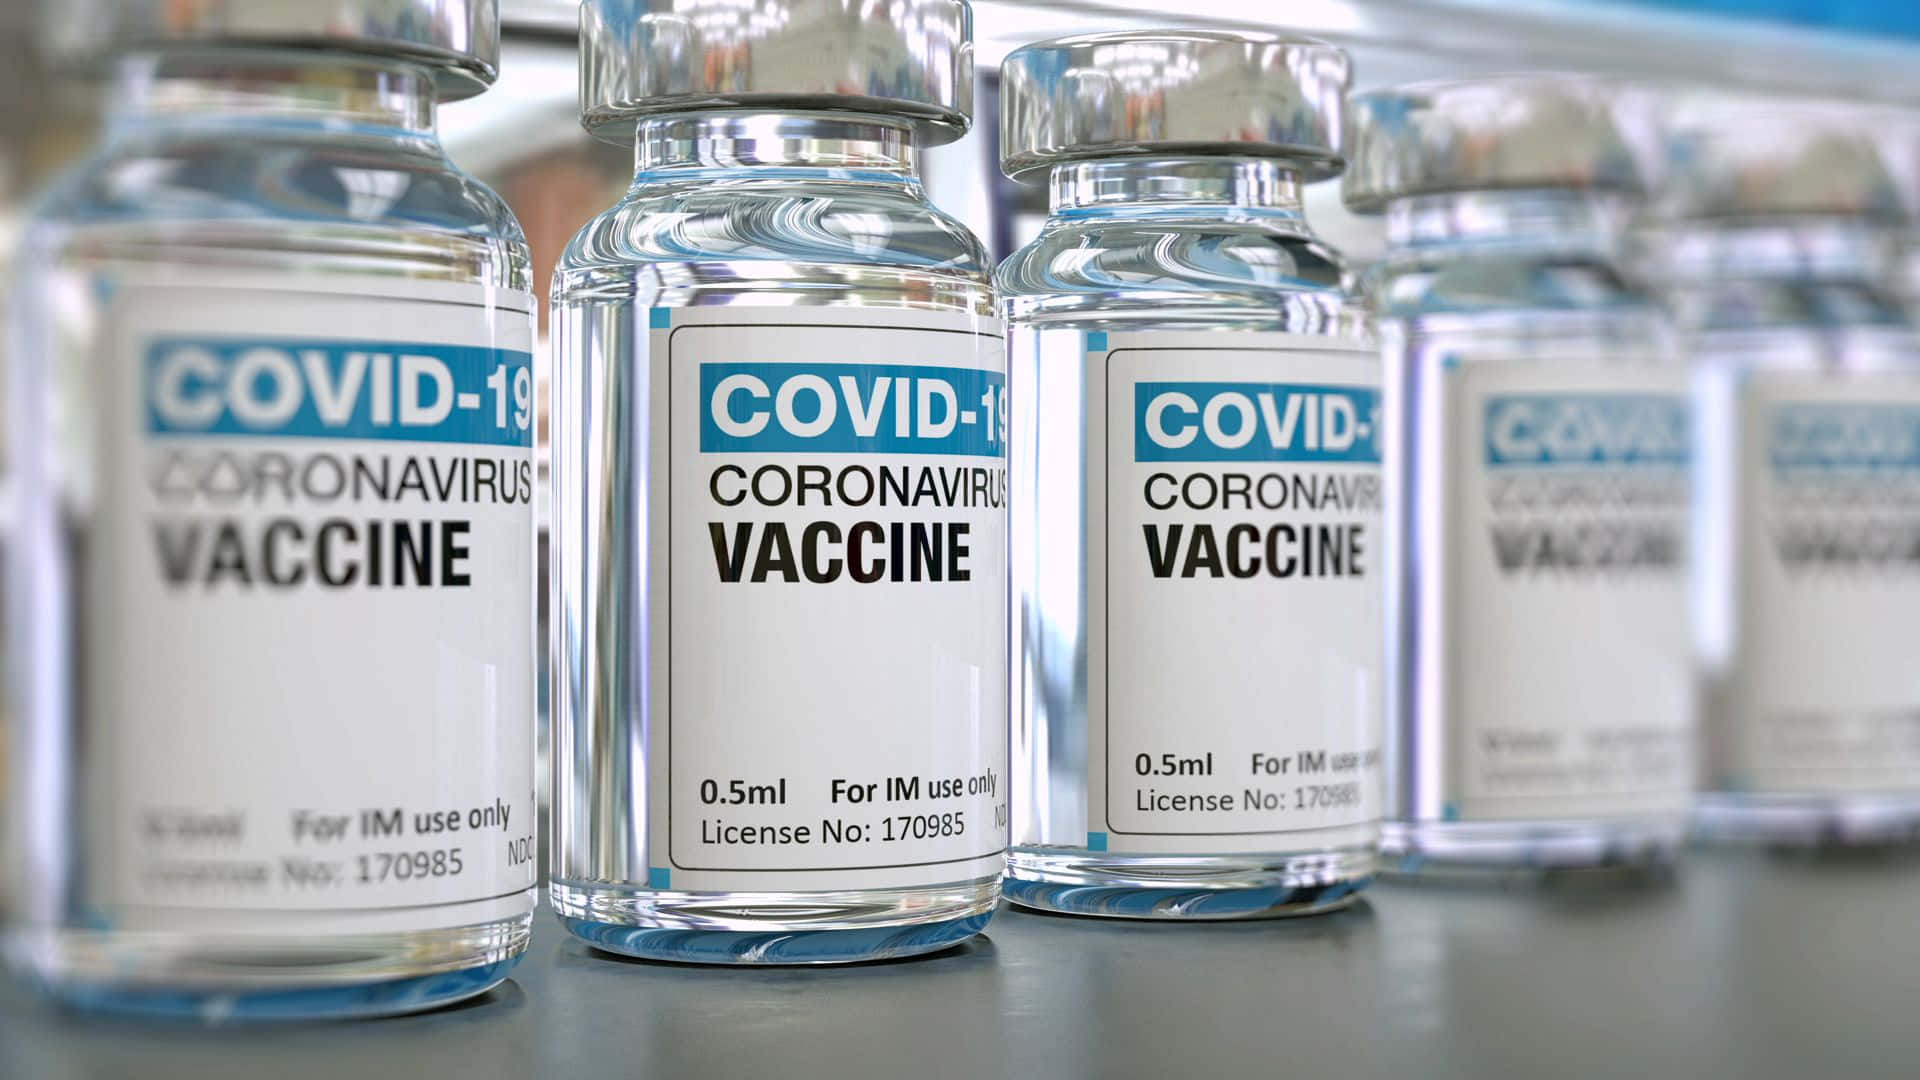 Imagende La Vacuna Covid-19